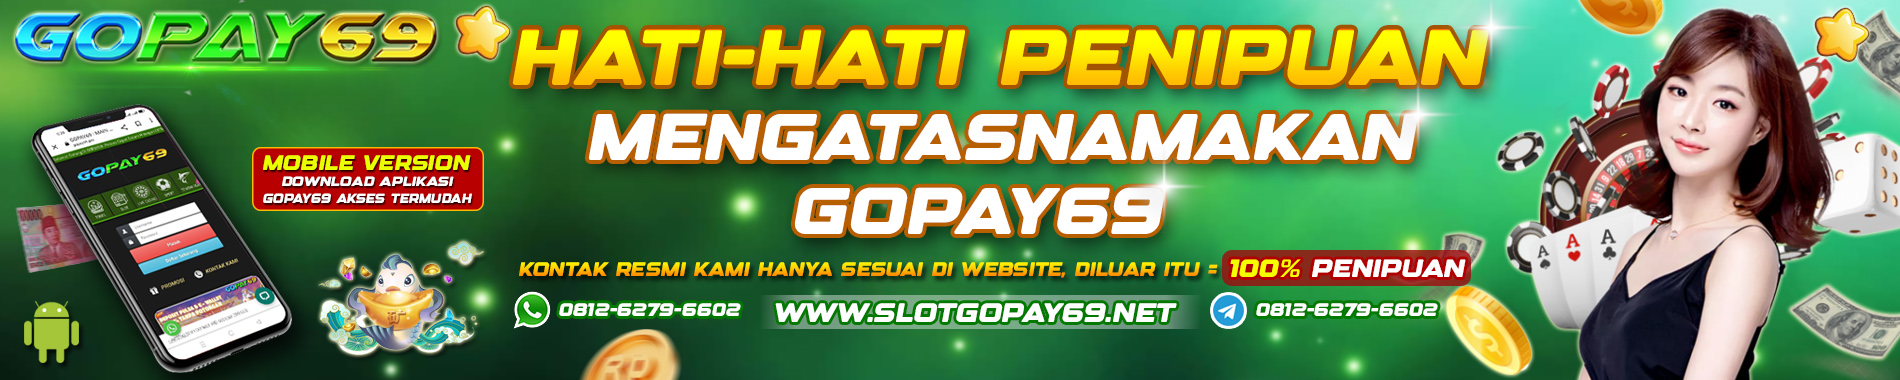 Gopay69 - PENIPUAN